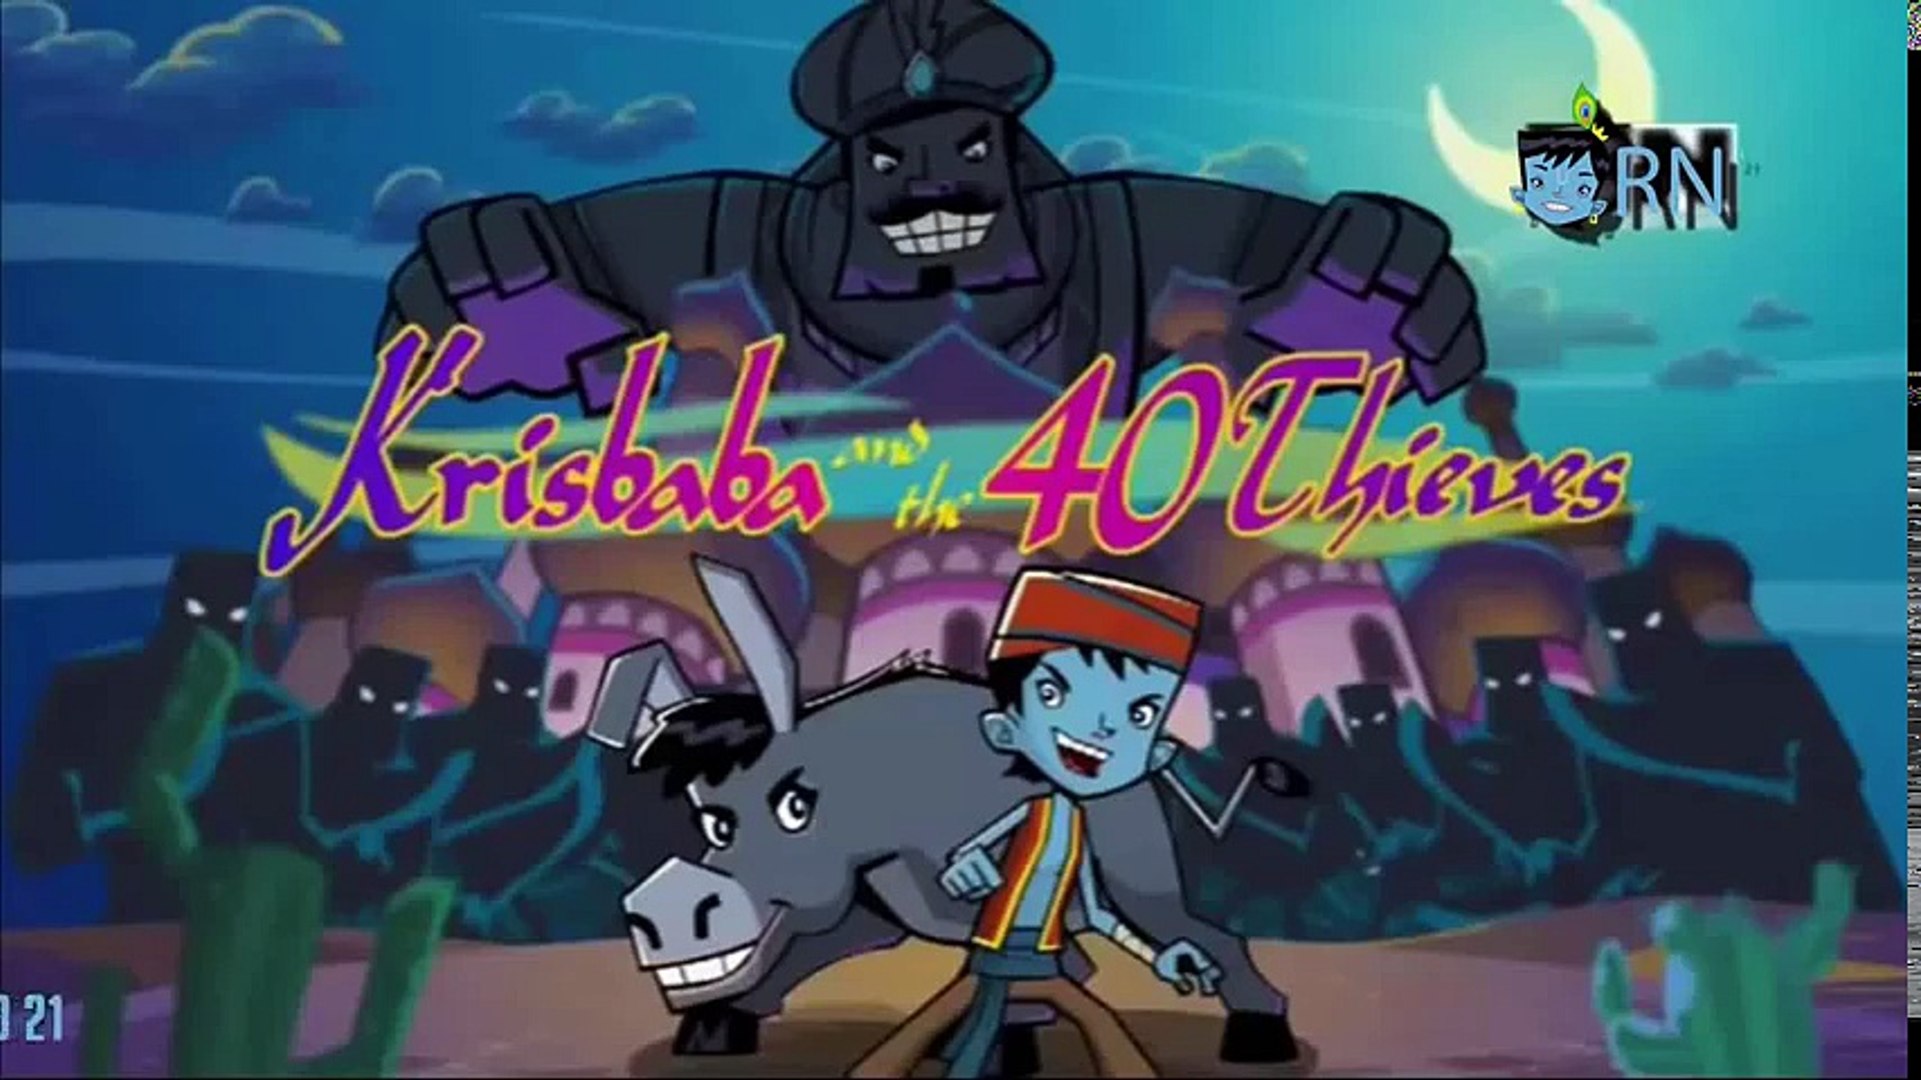 Hindi Krrish Baba 40 Chor Cartoons for Entertainment of Kids - Dailymotion  Video